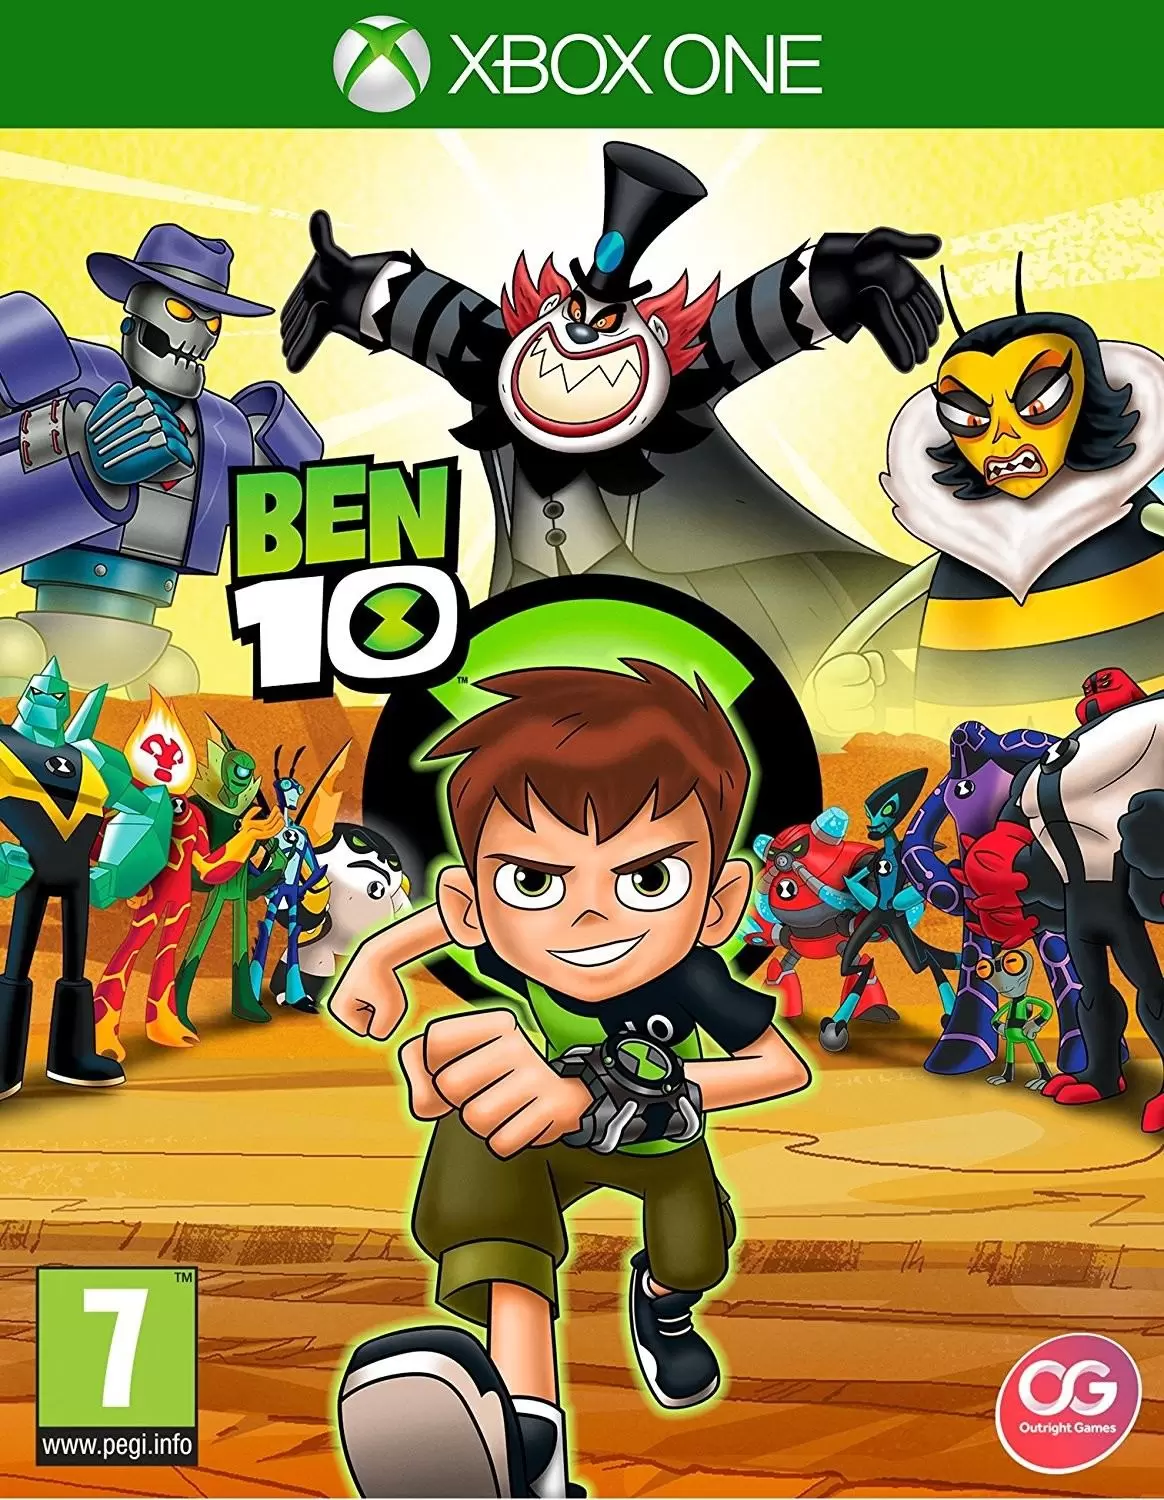 XBOX One Games - Ben 10